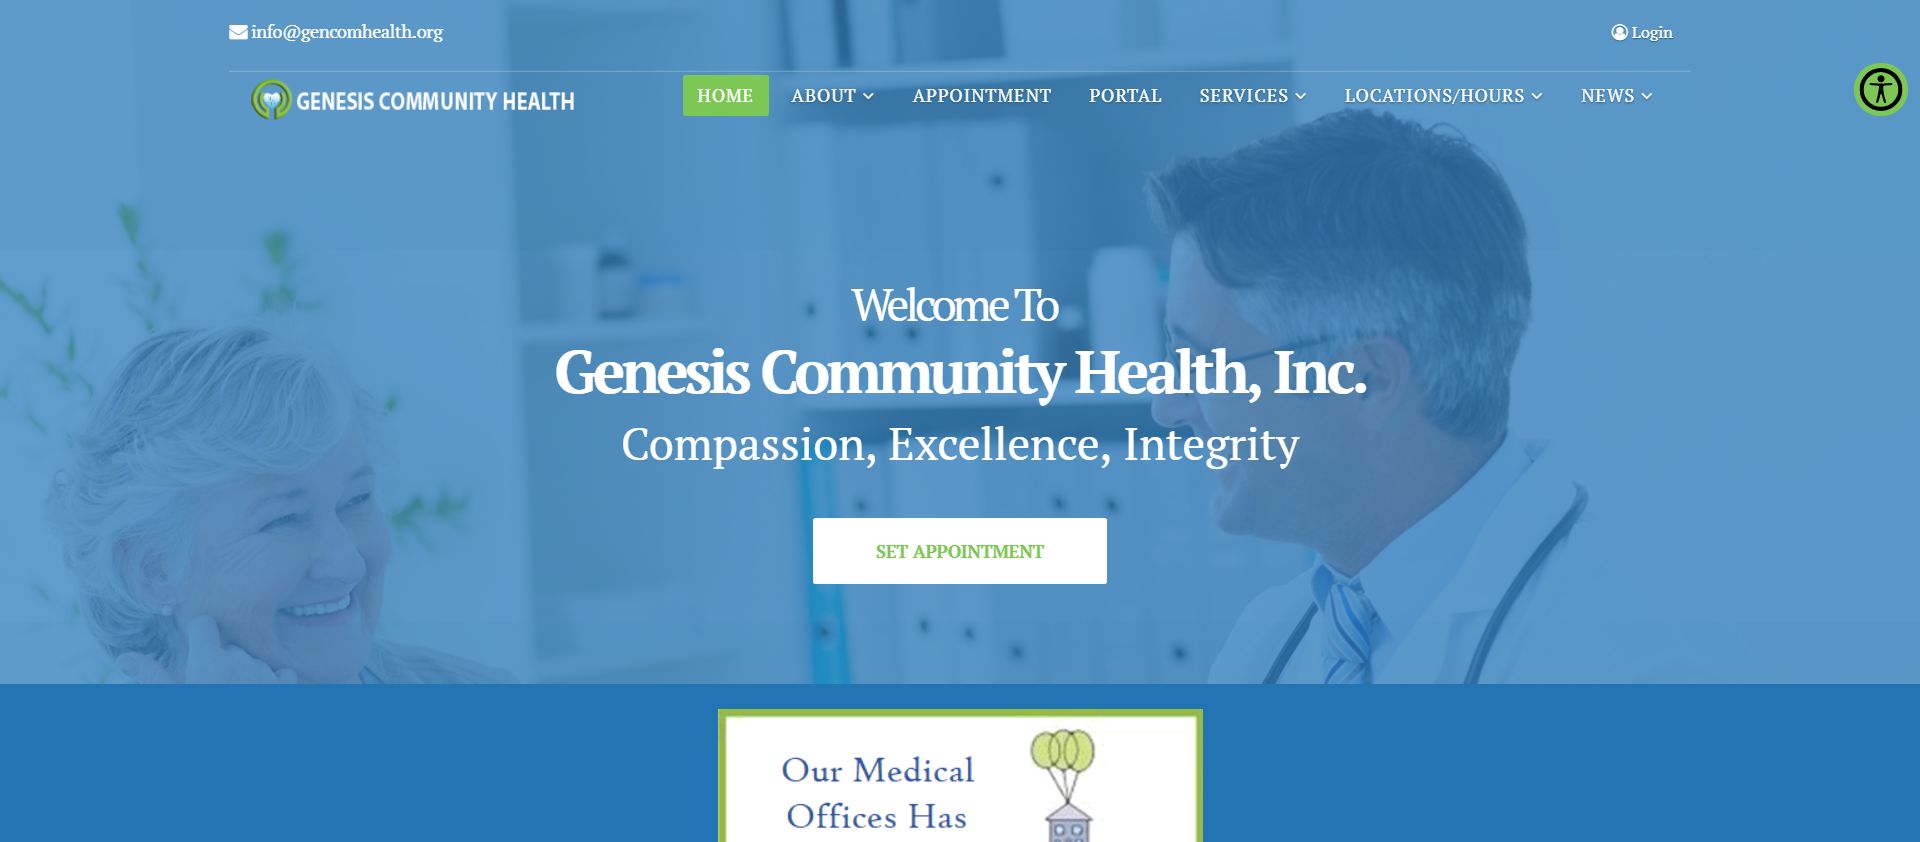 Genesis Community Health, Inc